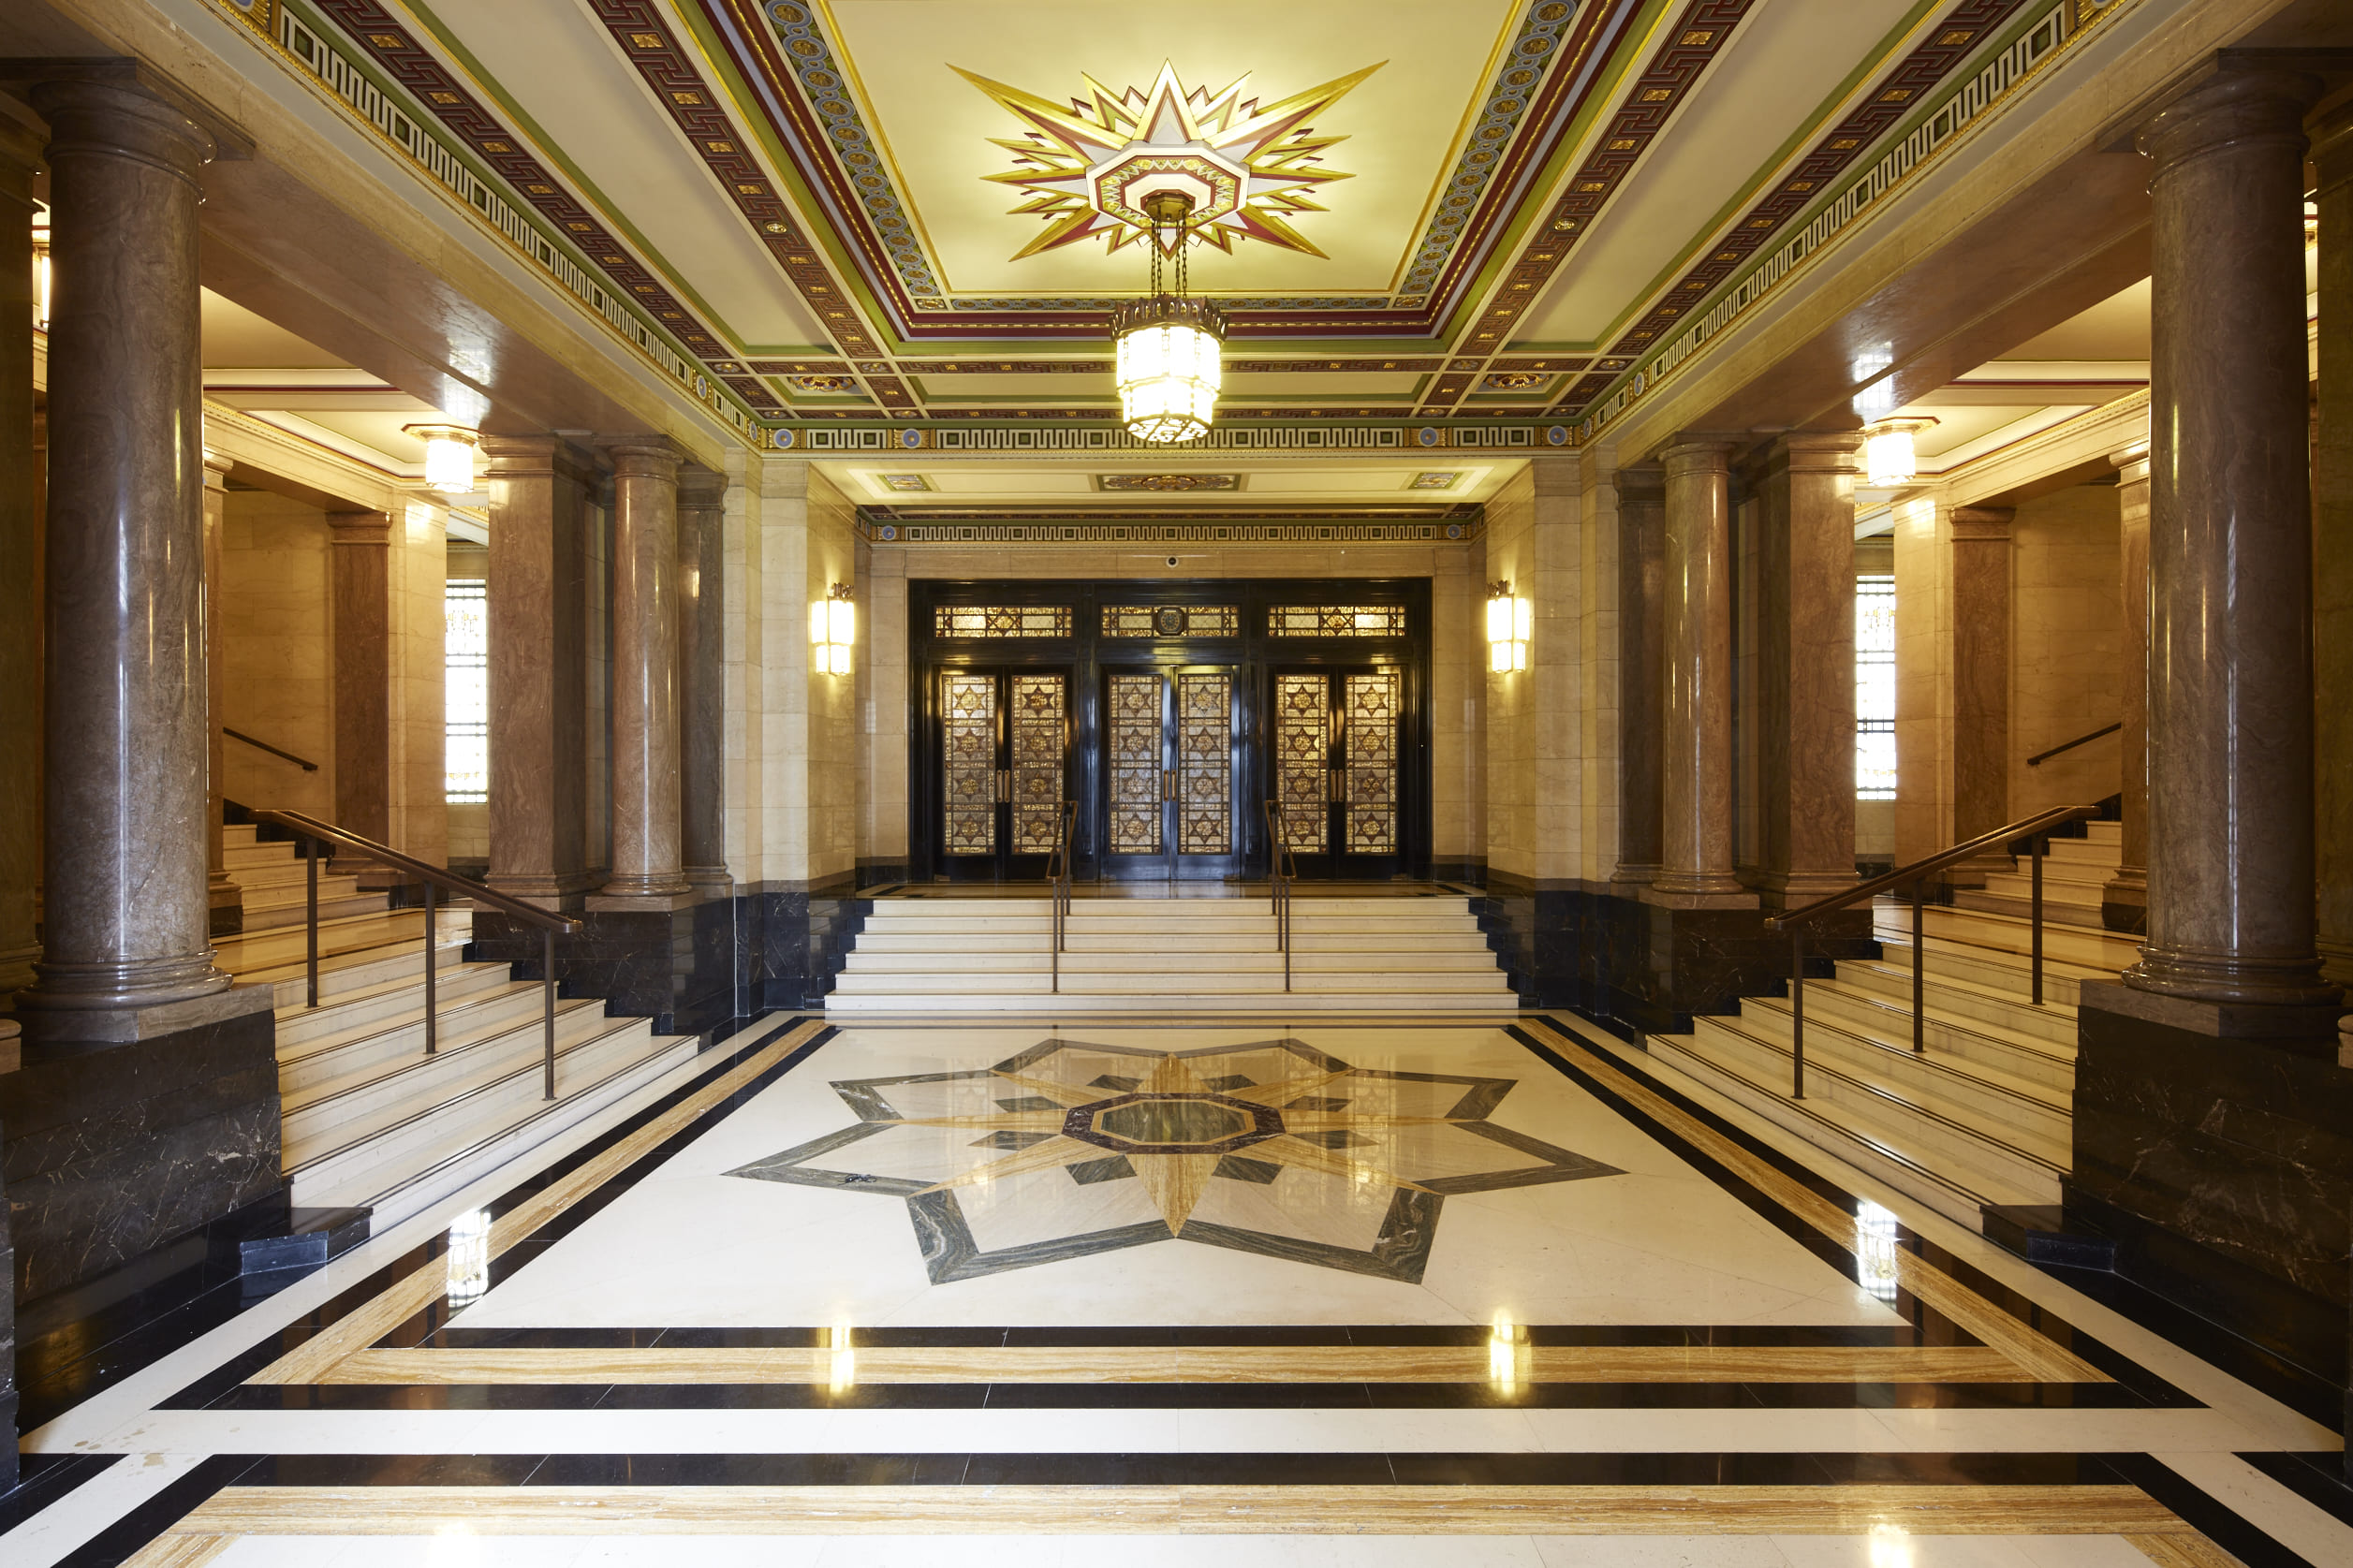 The interior of the Freemasons' Hall